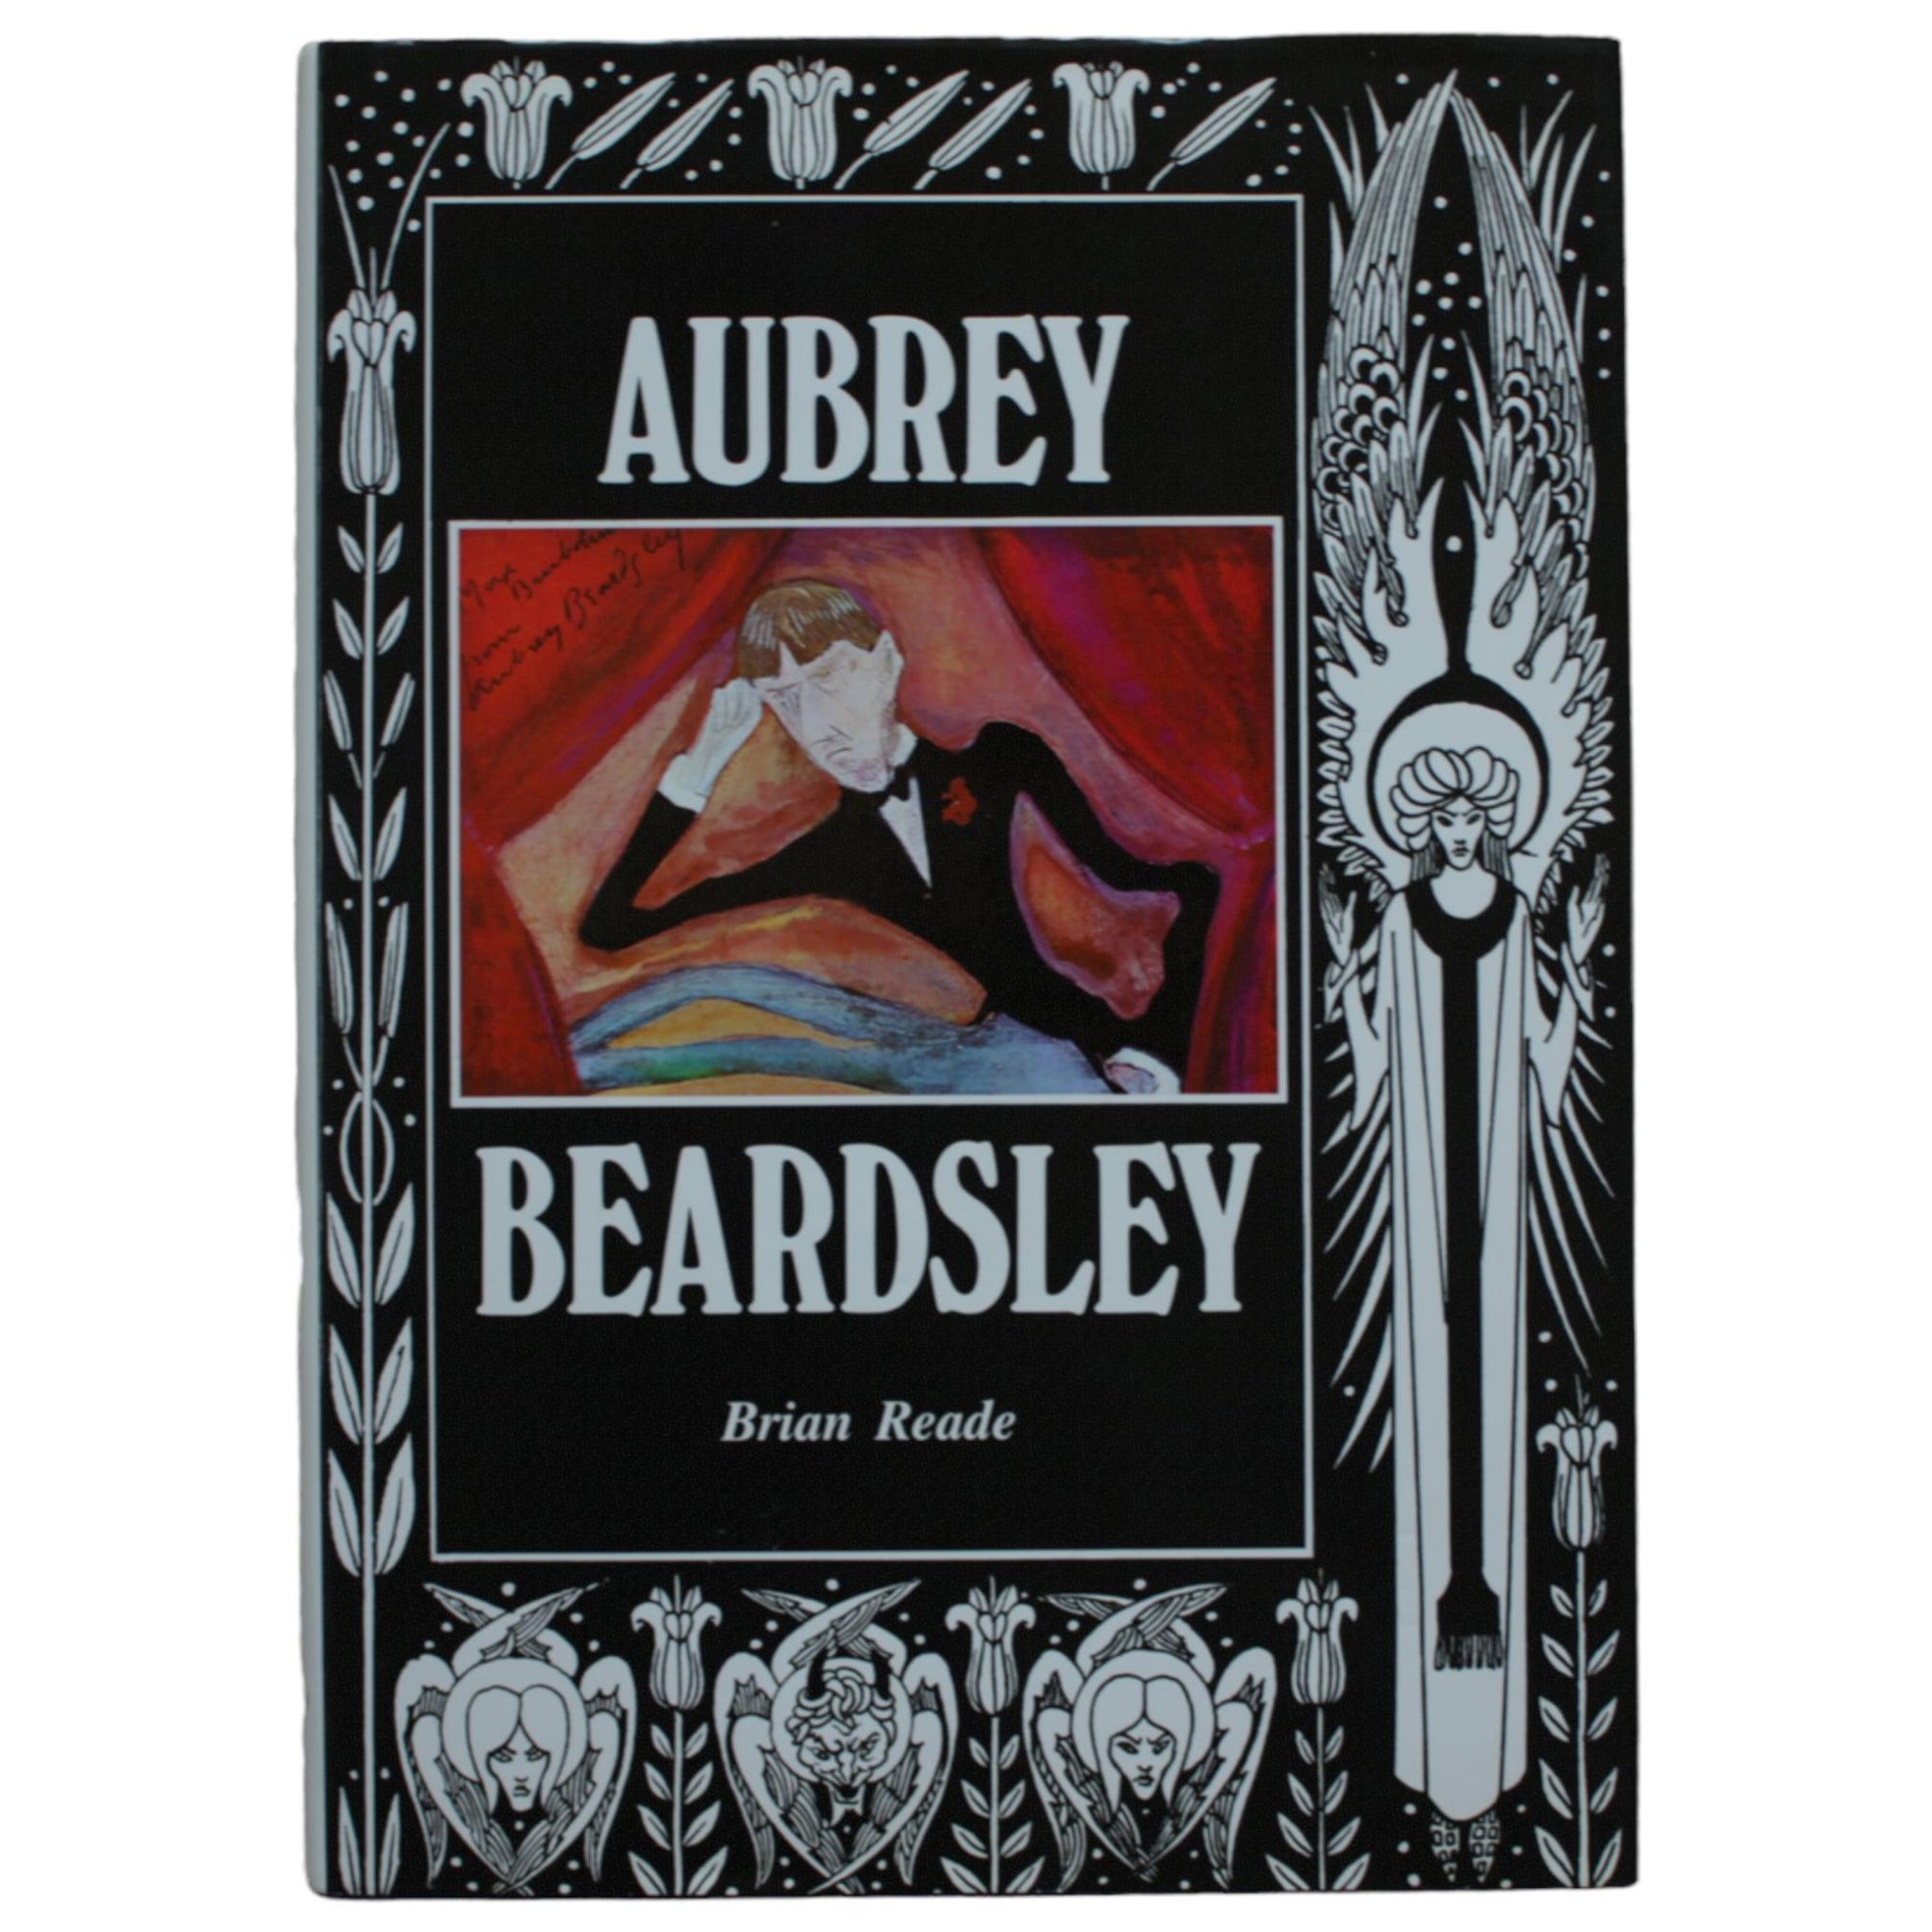 Aubrey Beardsley, Brian Reade, Hardcover, 1998, Art Book For Sale